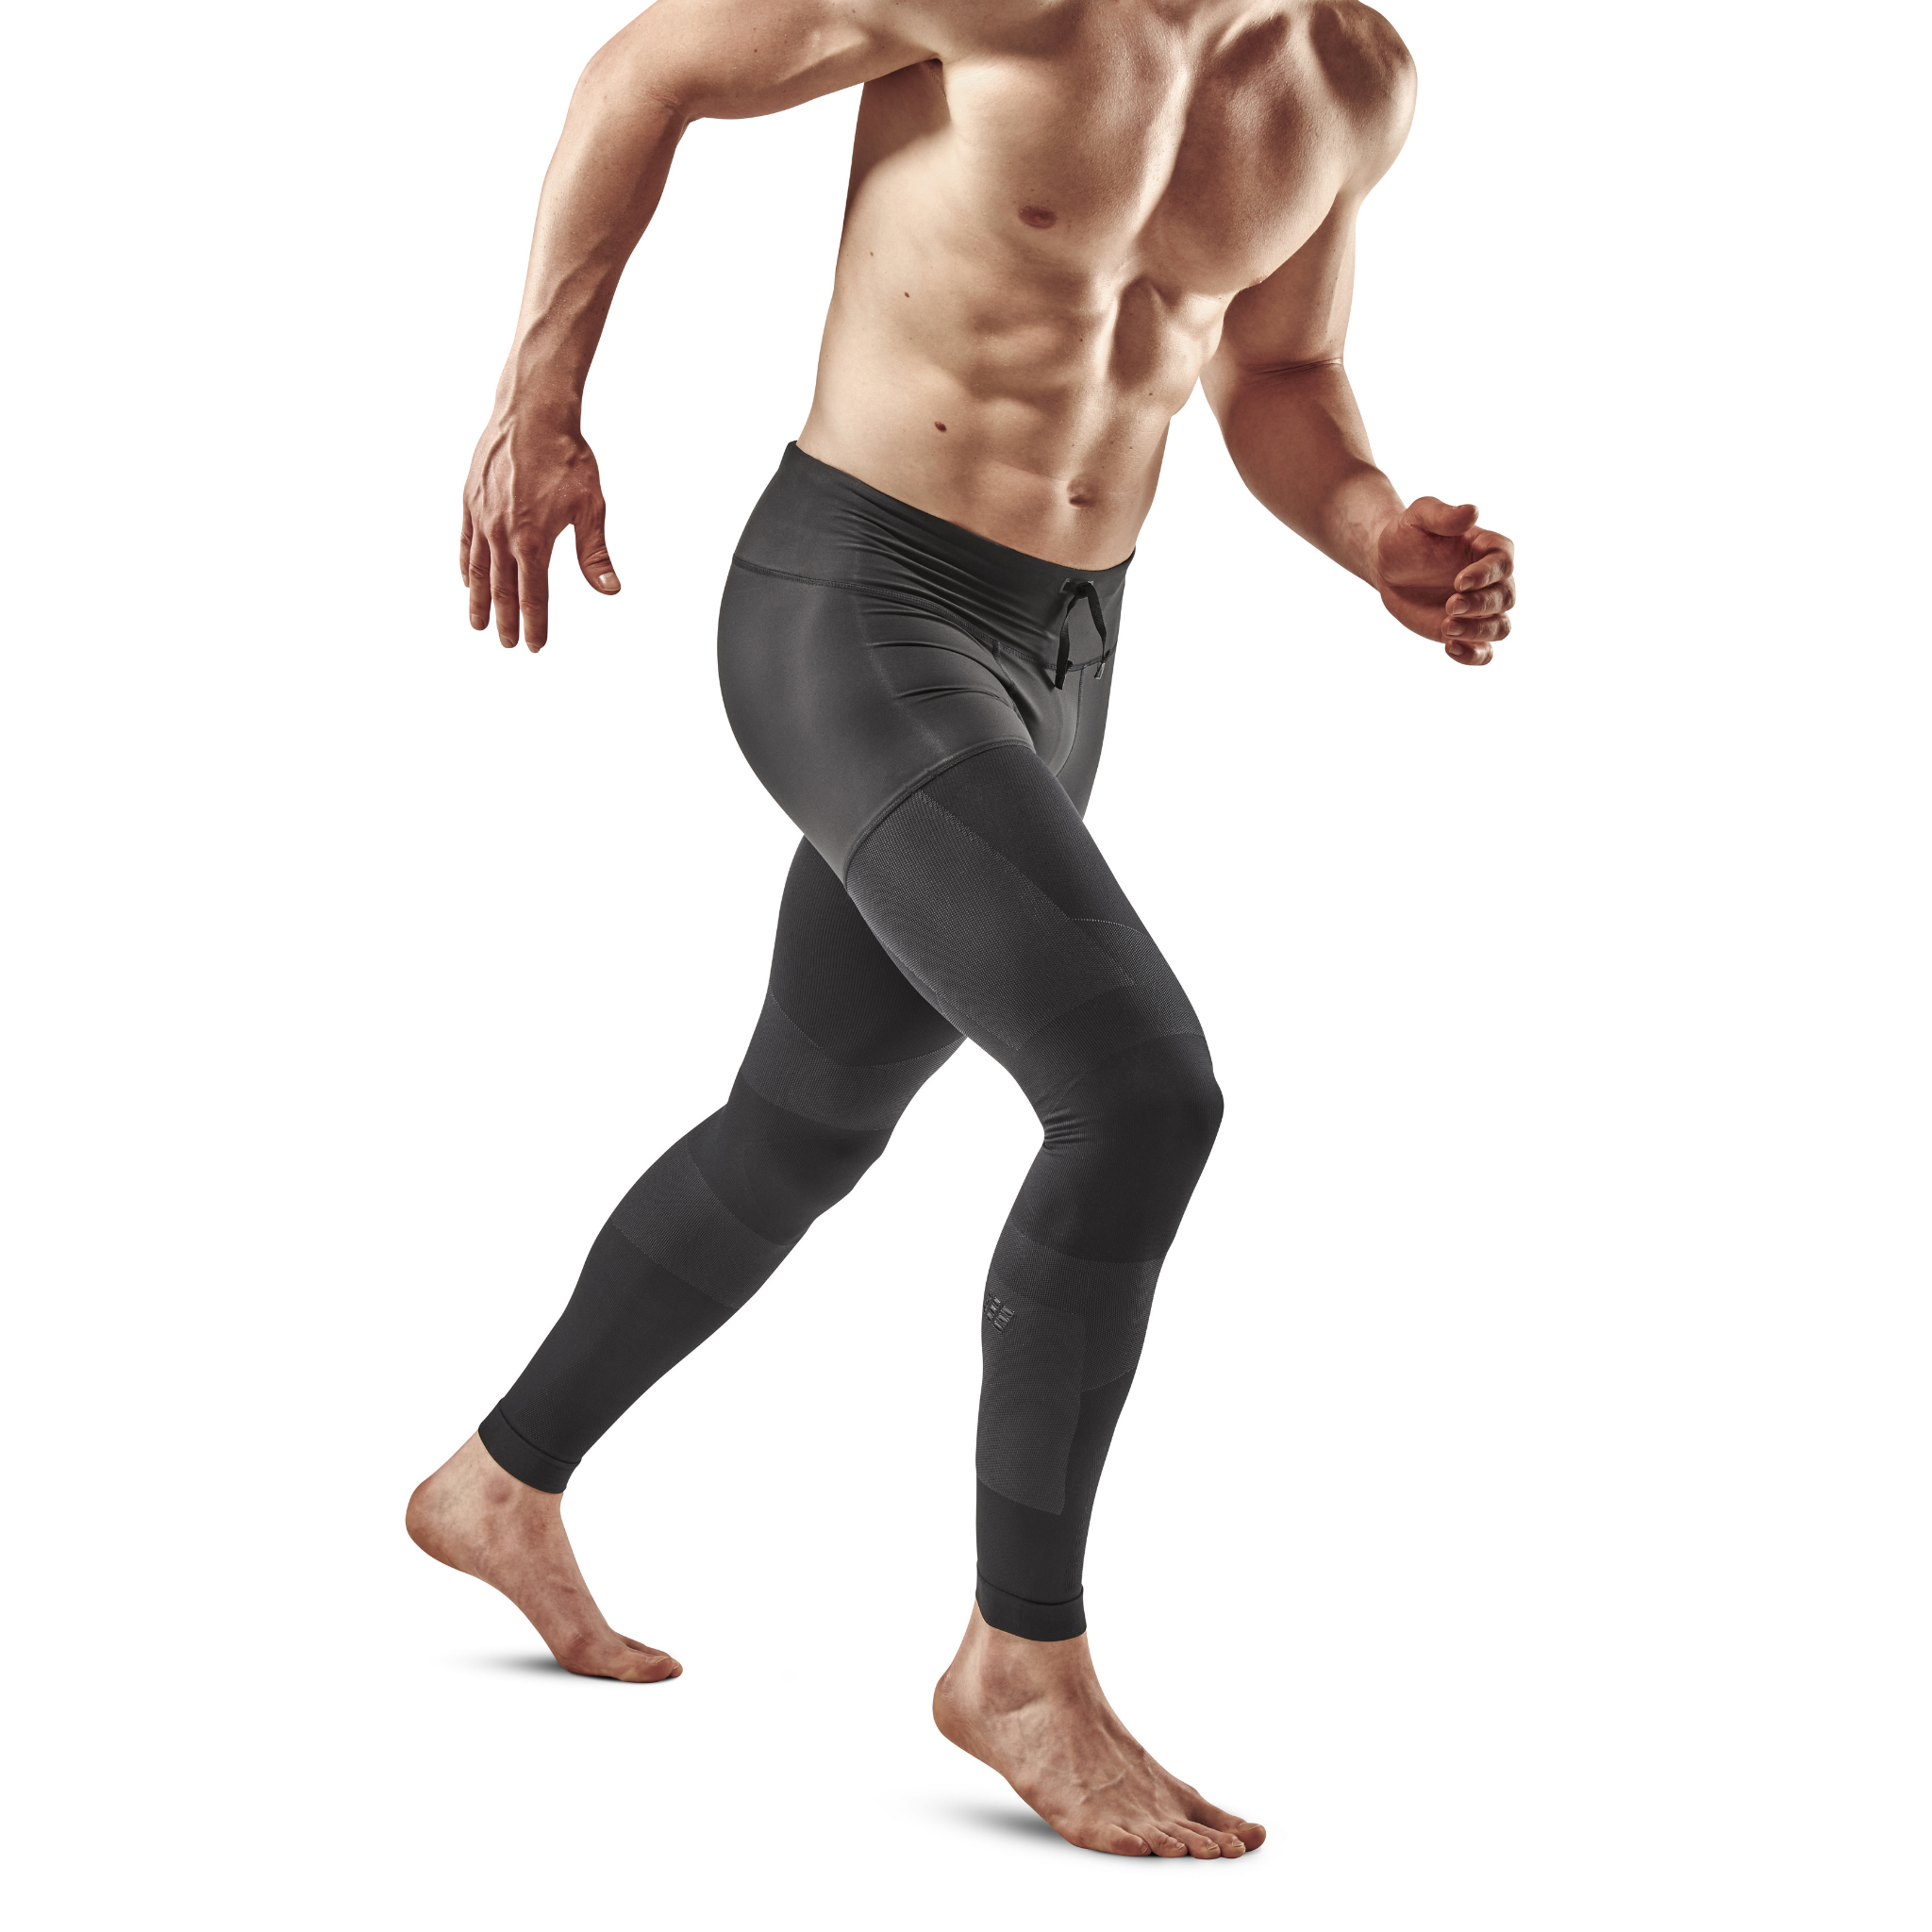 Compression Run Shorts 4.0 for Men, Running, Gym